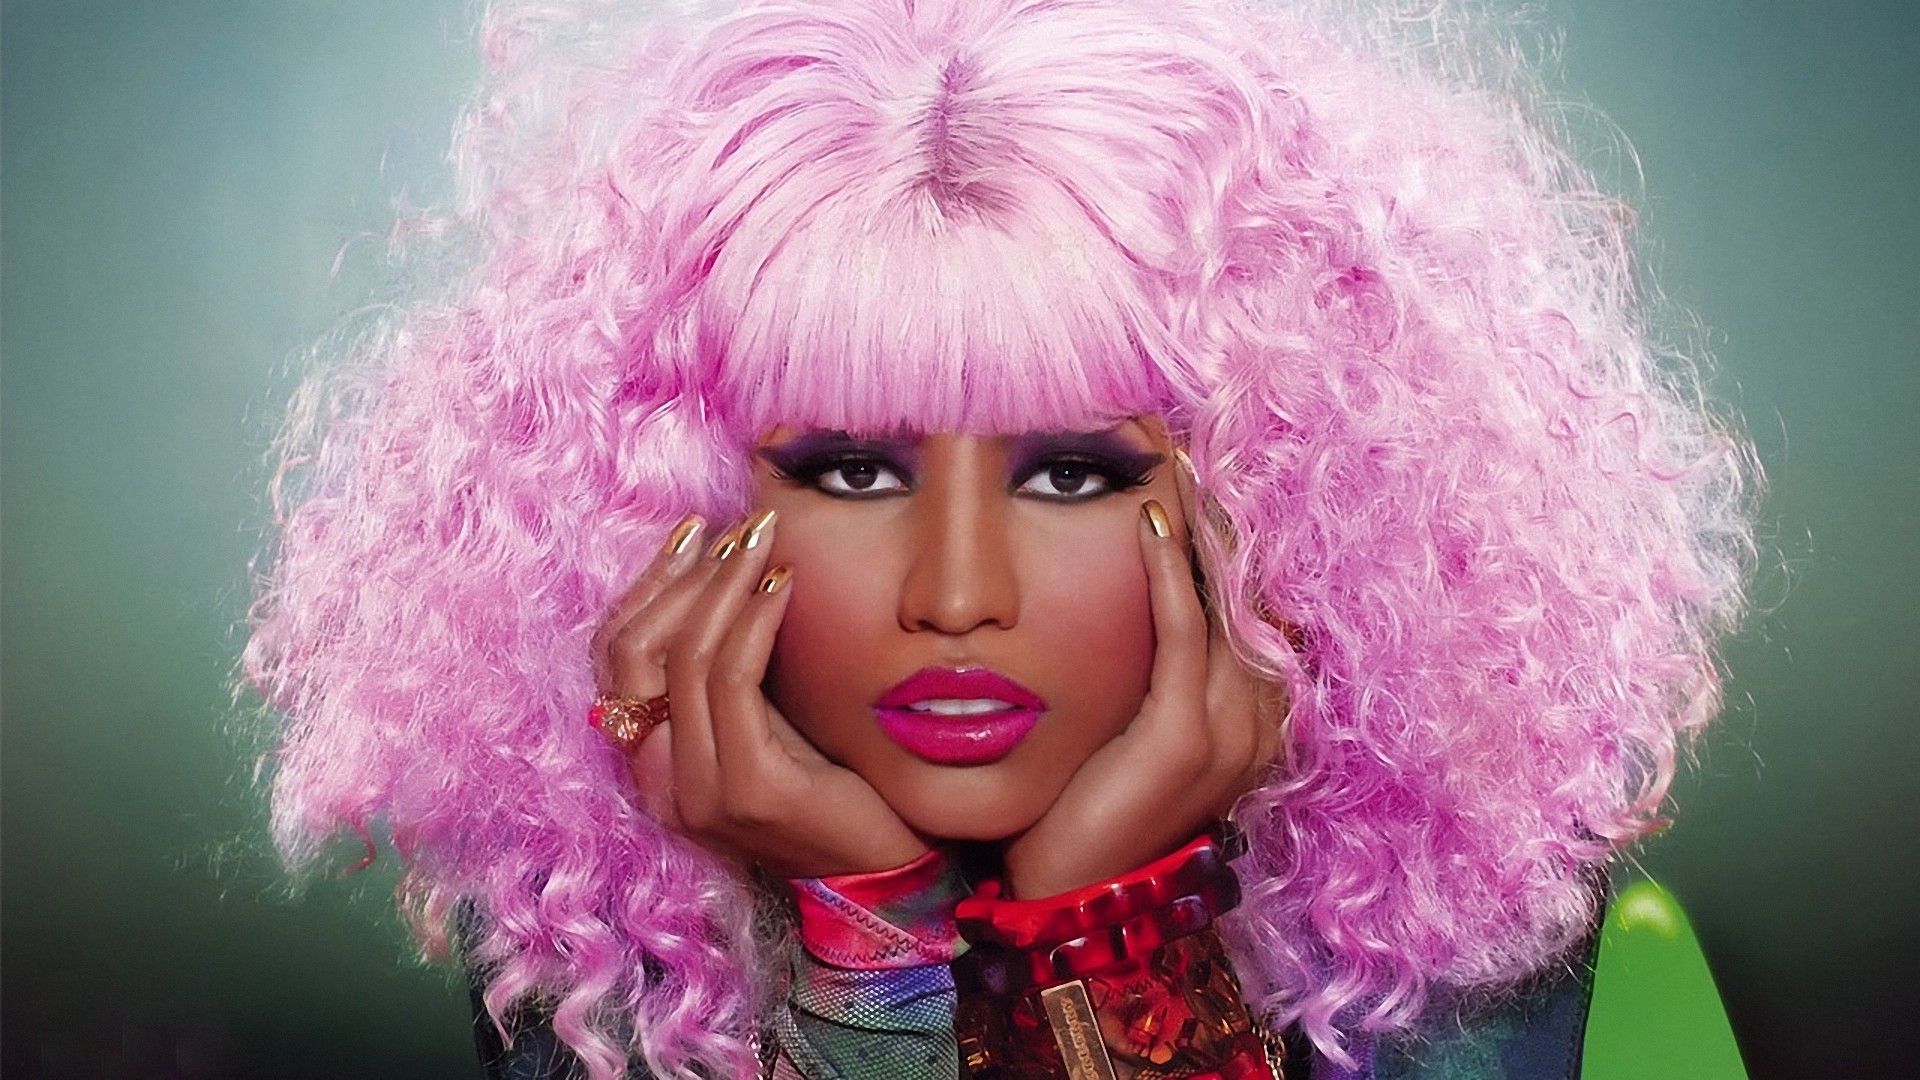 Nicki Minaj 2013 Hd Wallpaper High Quality WallpapersWallpaper